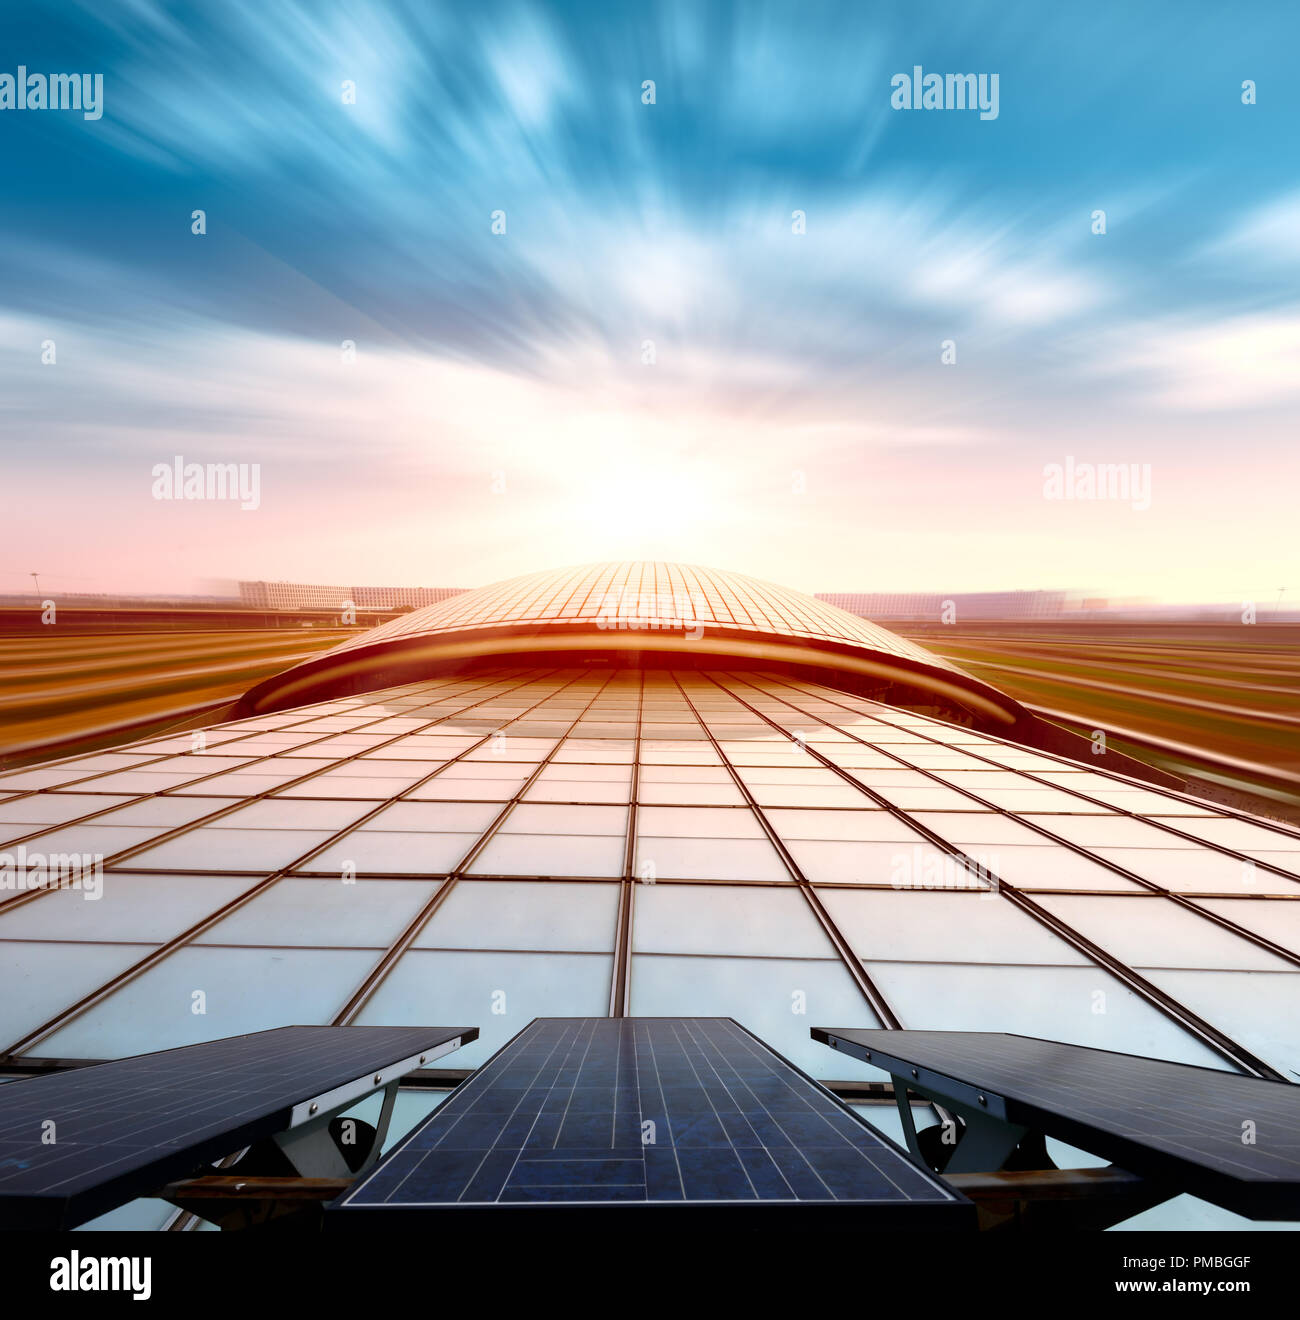 Solar panels with blue sky Stock Photo